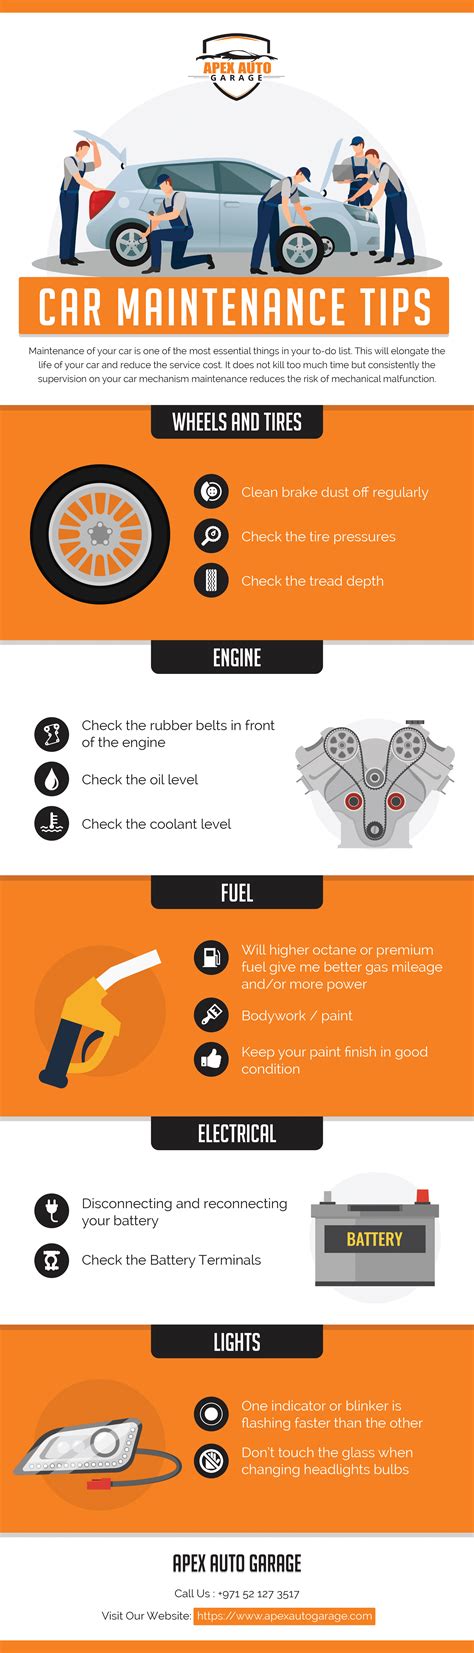 Car Maintenance Tips Infographic Apex Auto Garage Photos